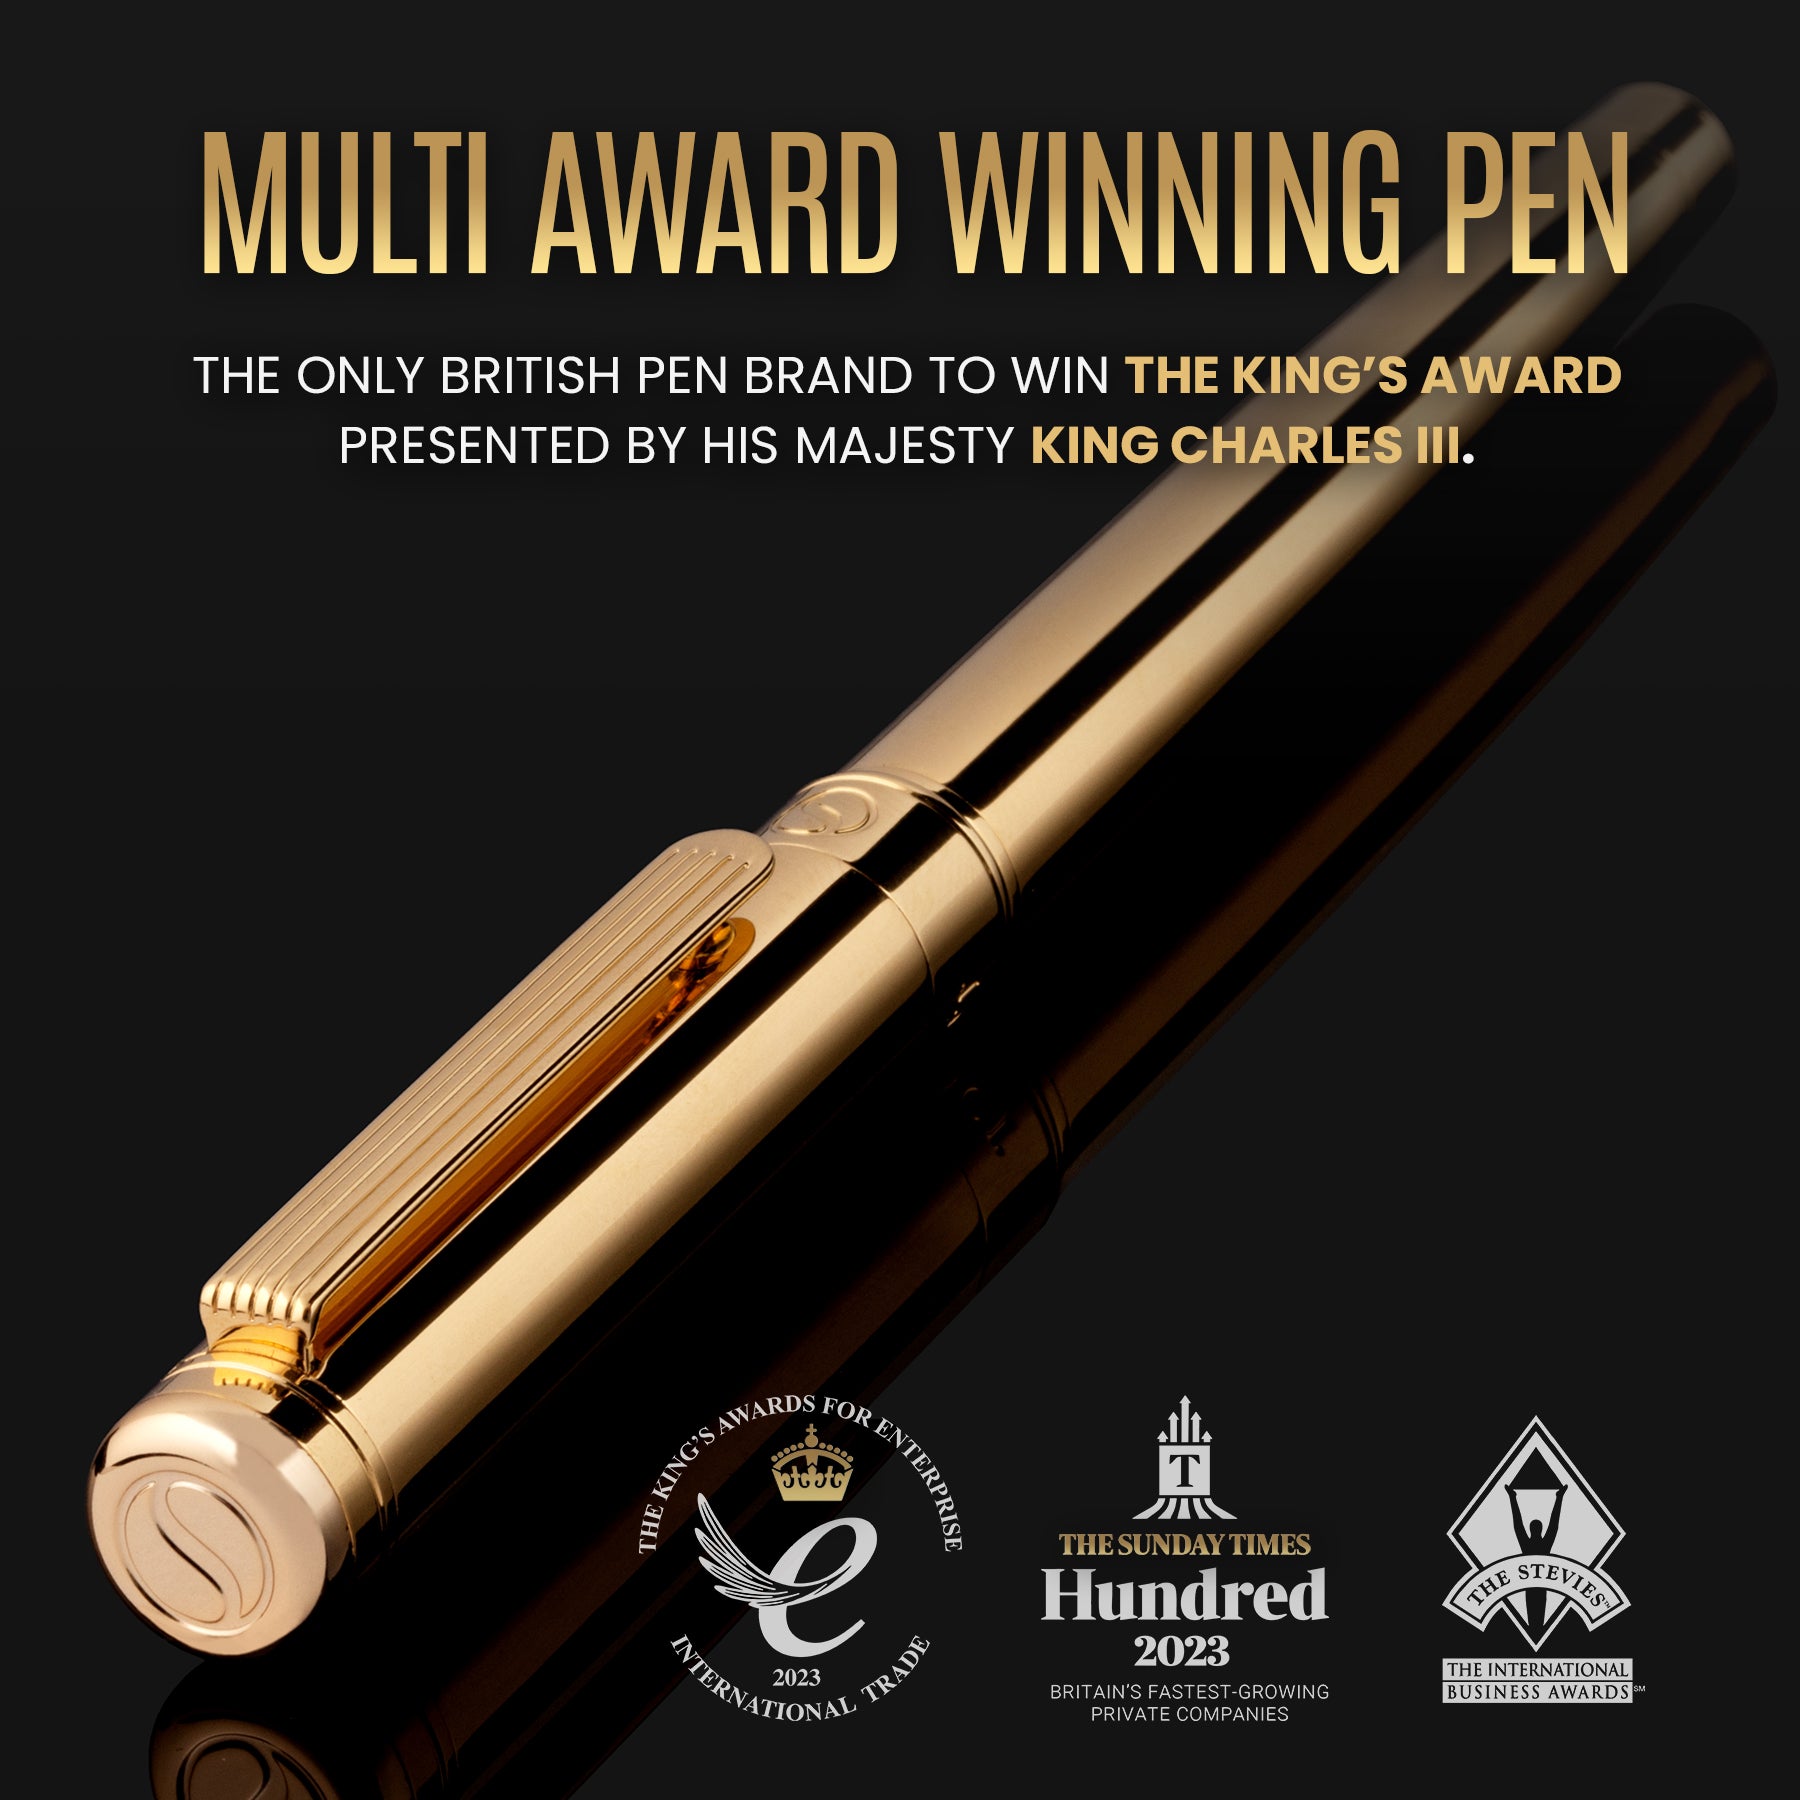 Scriveiner Classic Gold Rollerball Pen